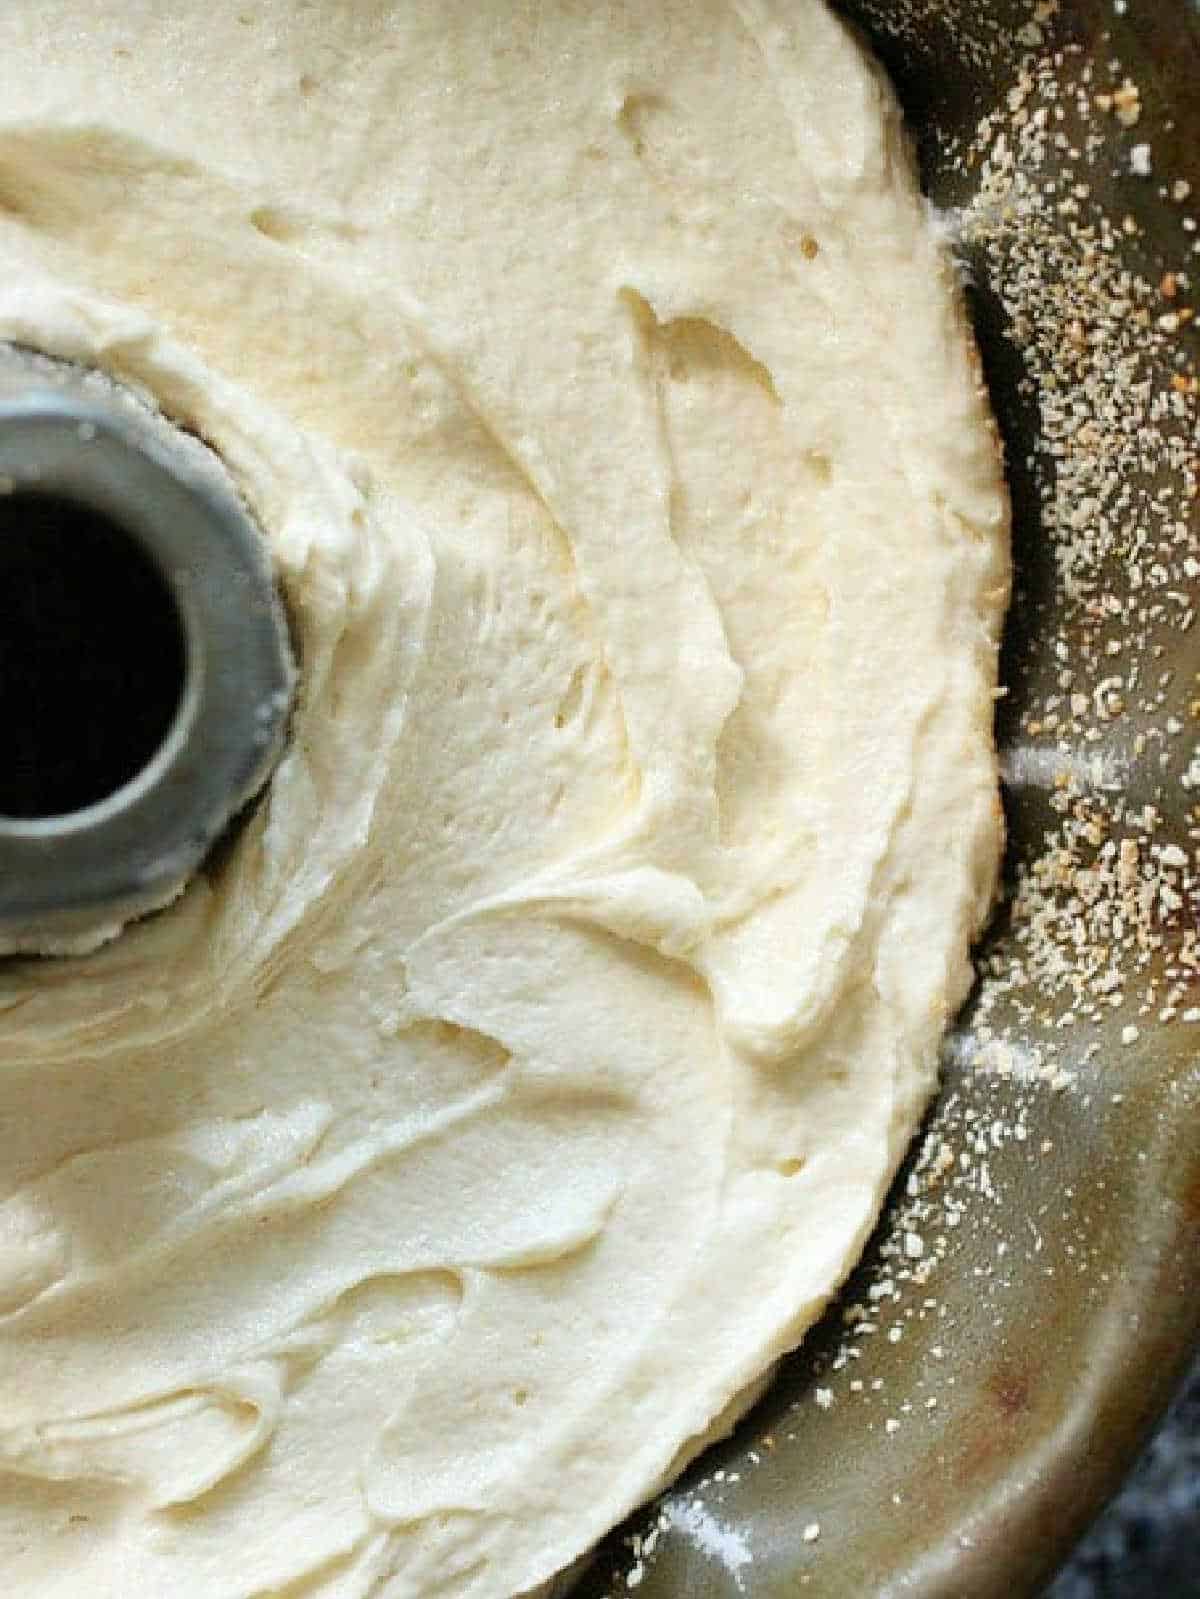 Partial image of Brown Butter Cake batter in bundt pan.